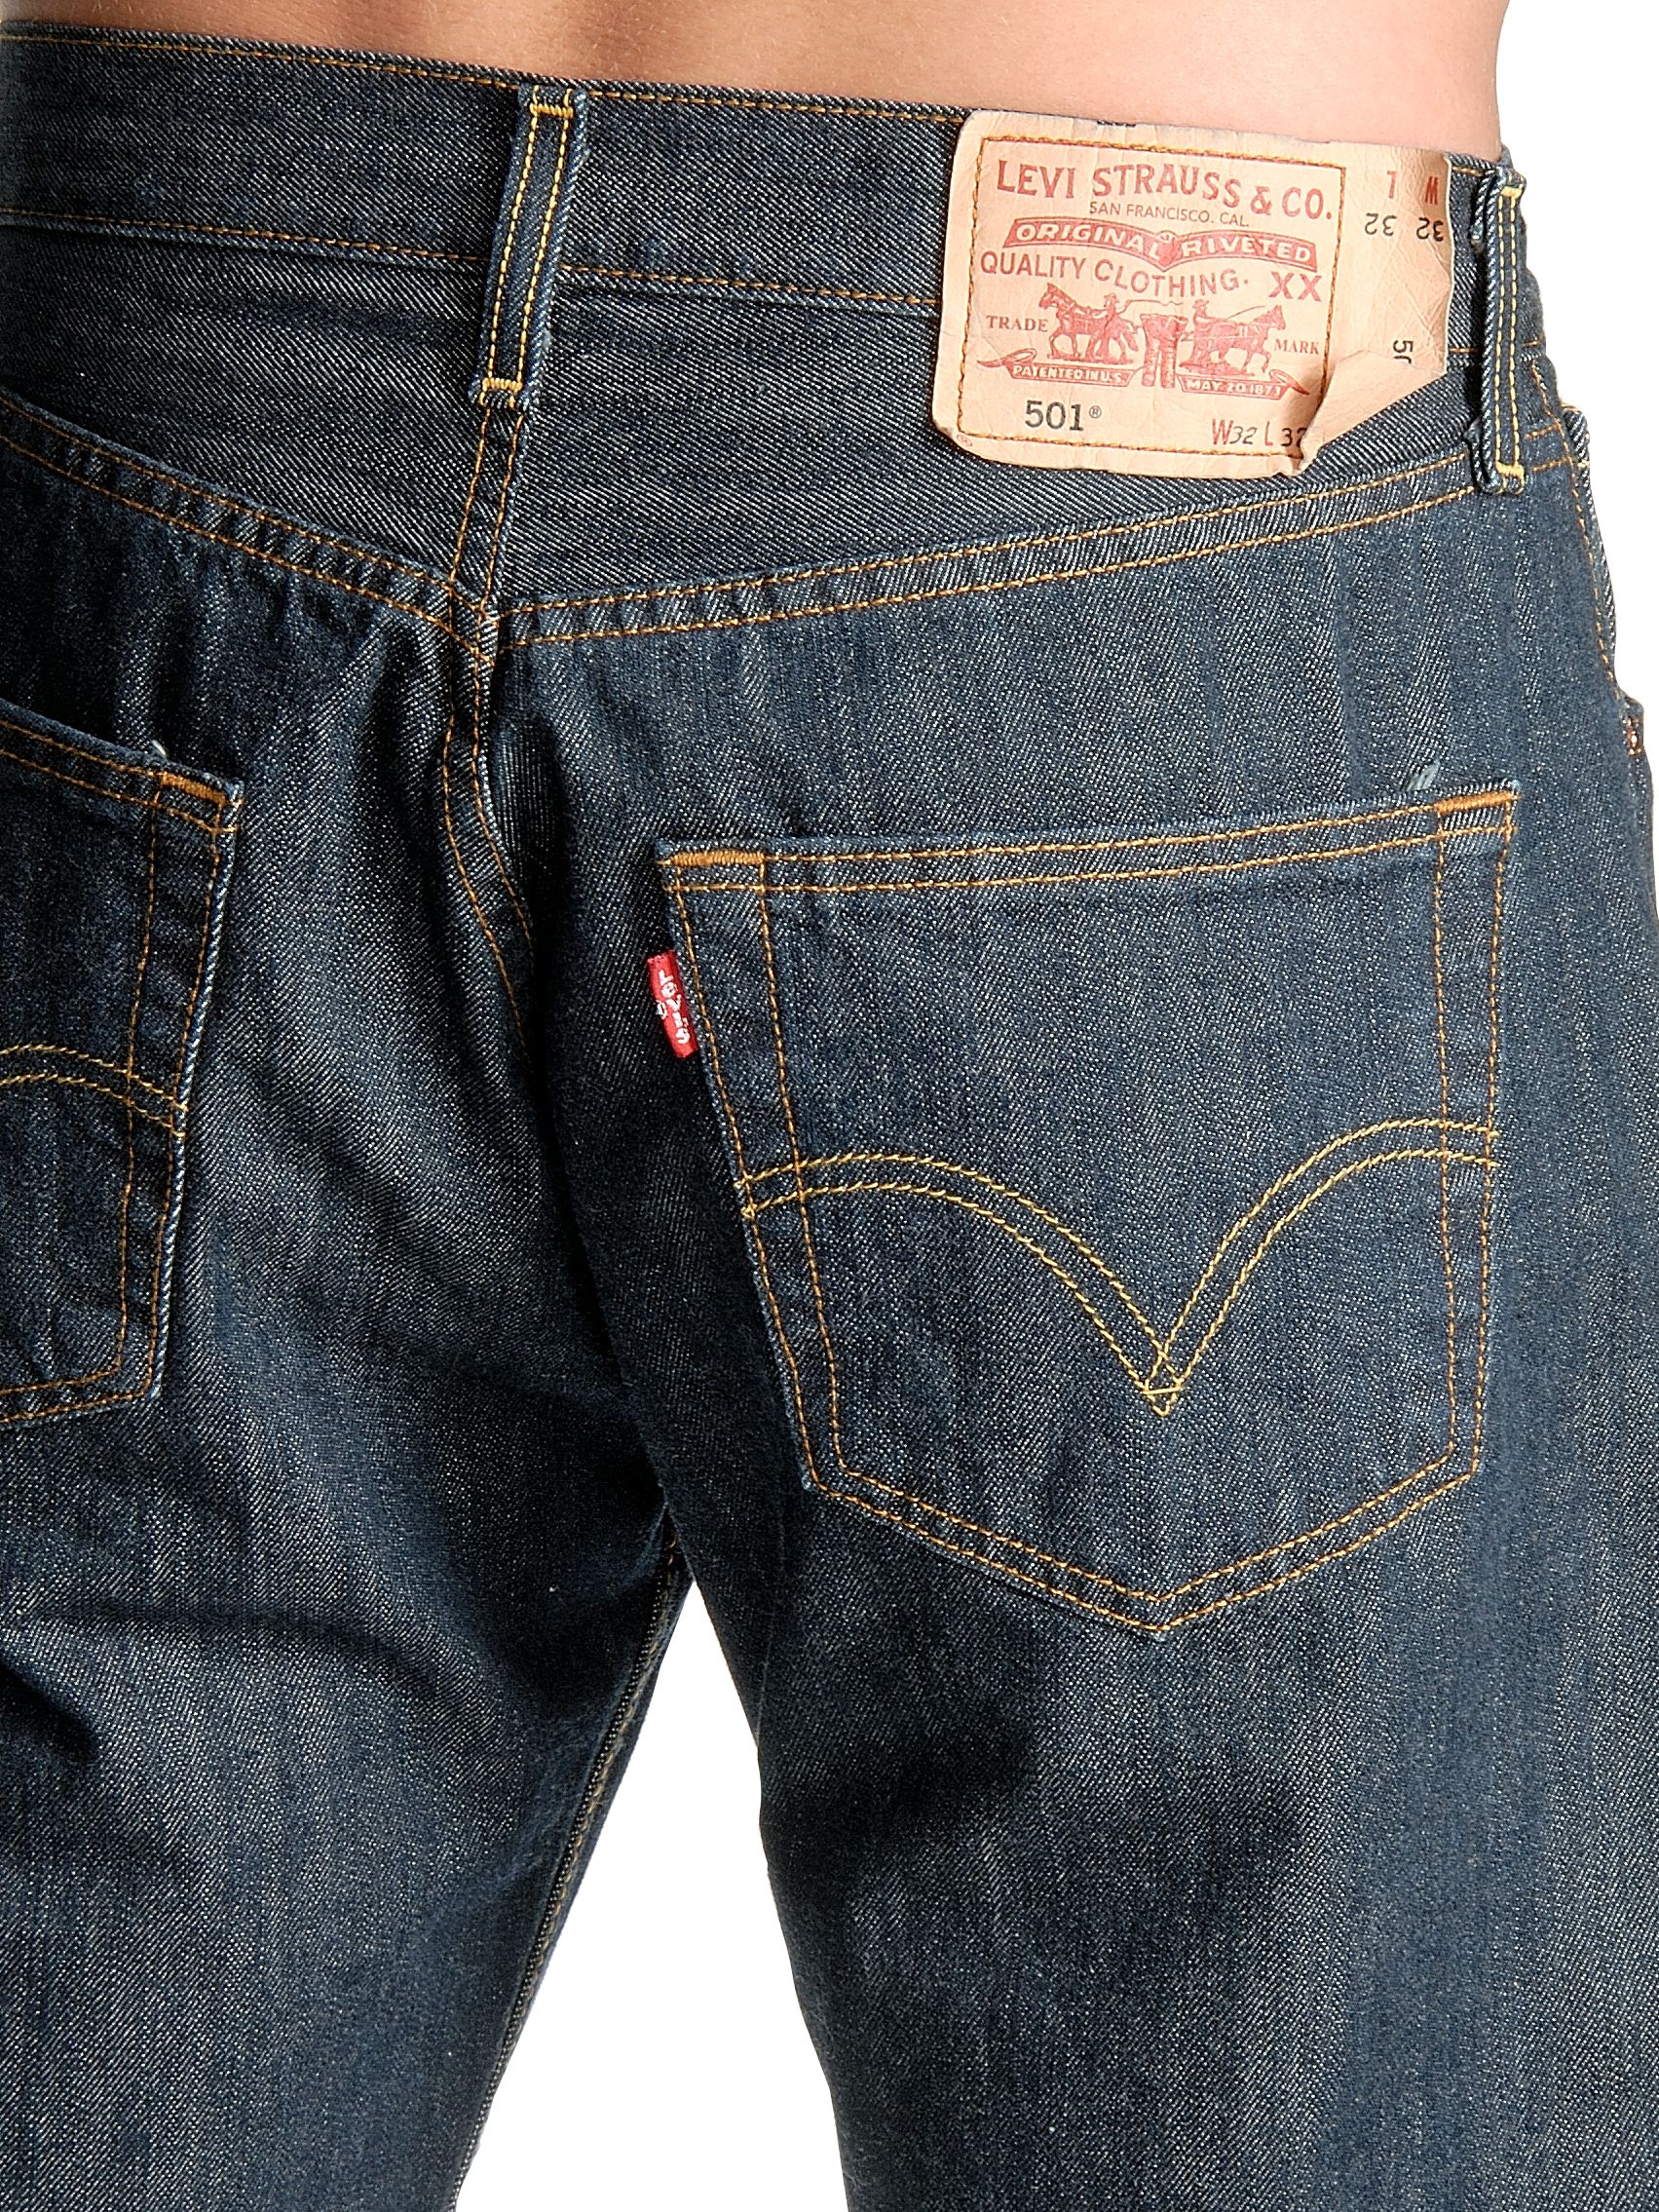 levis original riveted jeans